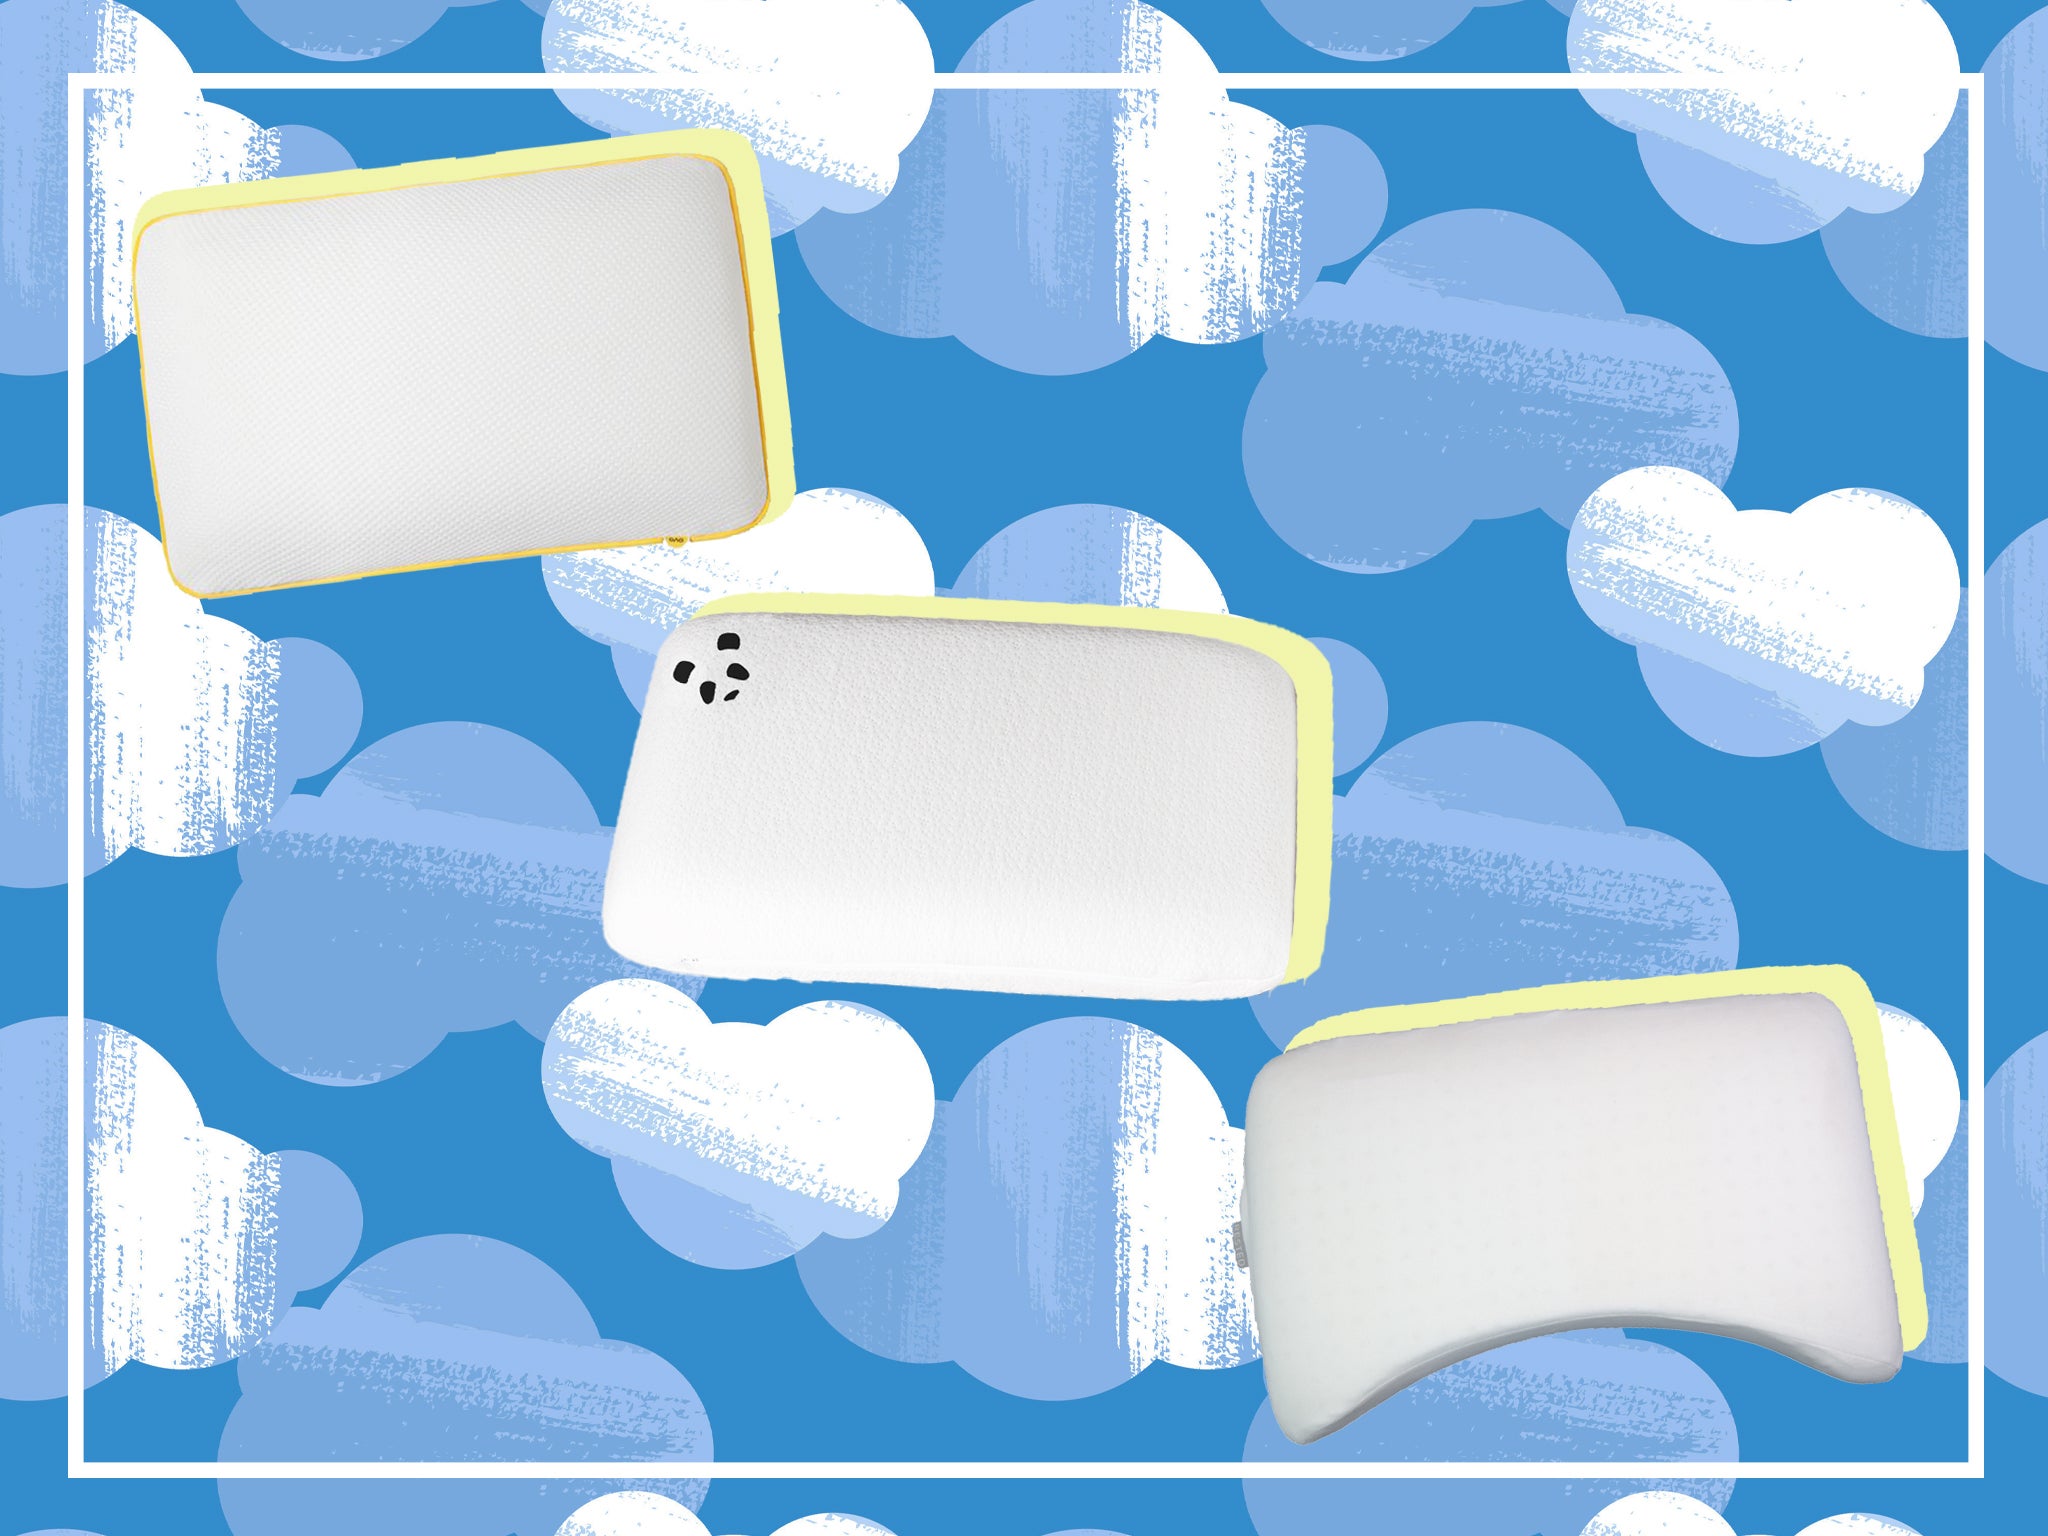 cloud foam pillow